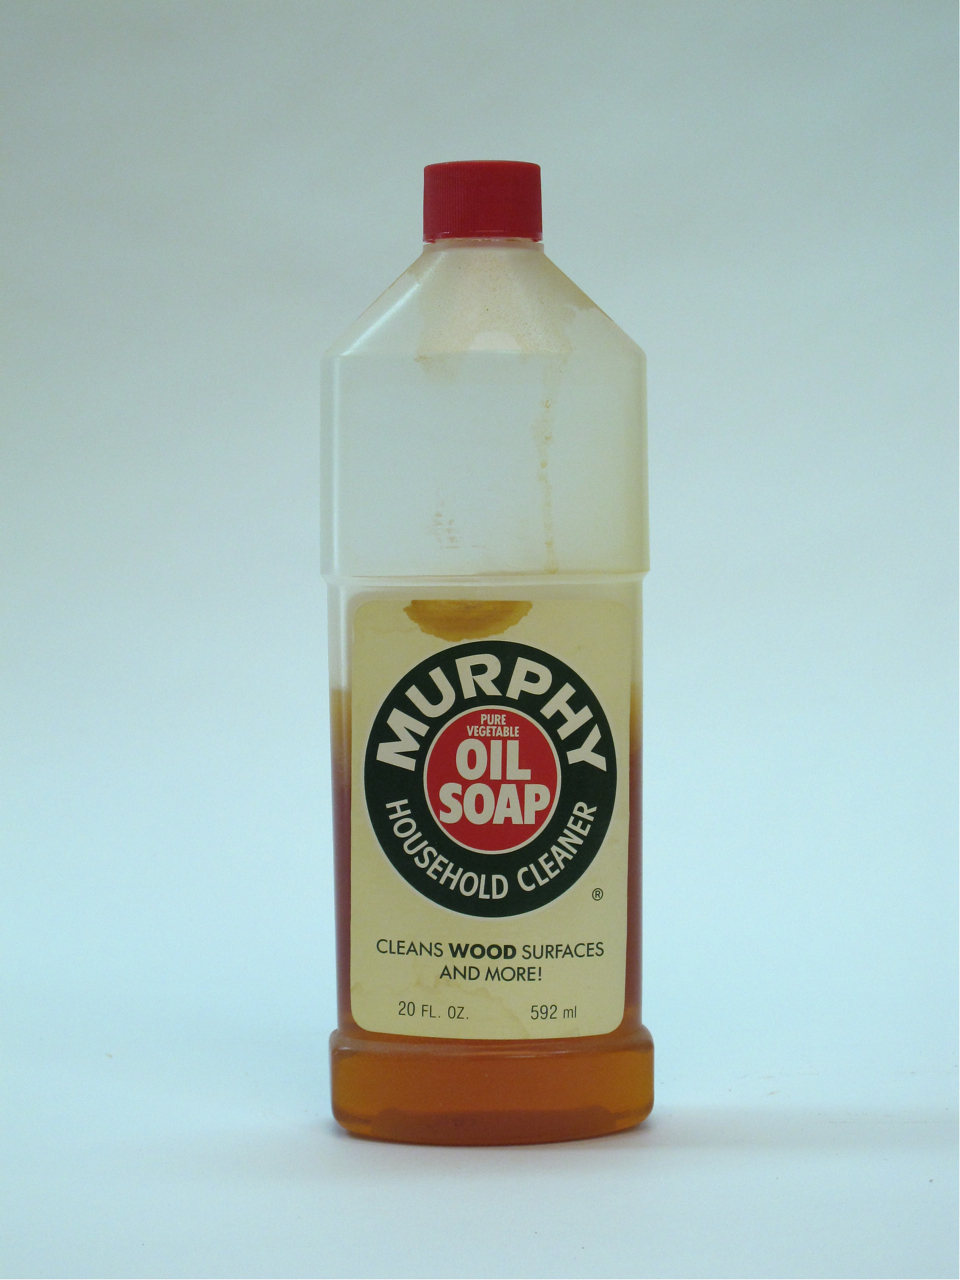 Ultimate Guide: Mastering Murphy Oil to Clean Hardwood Floors